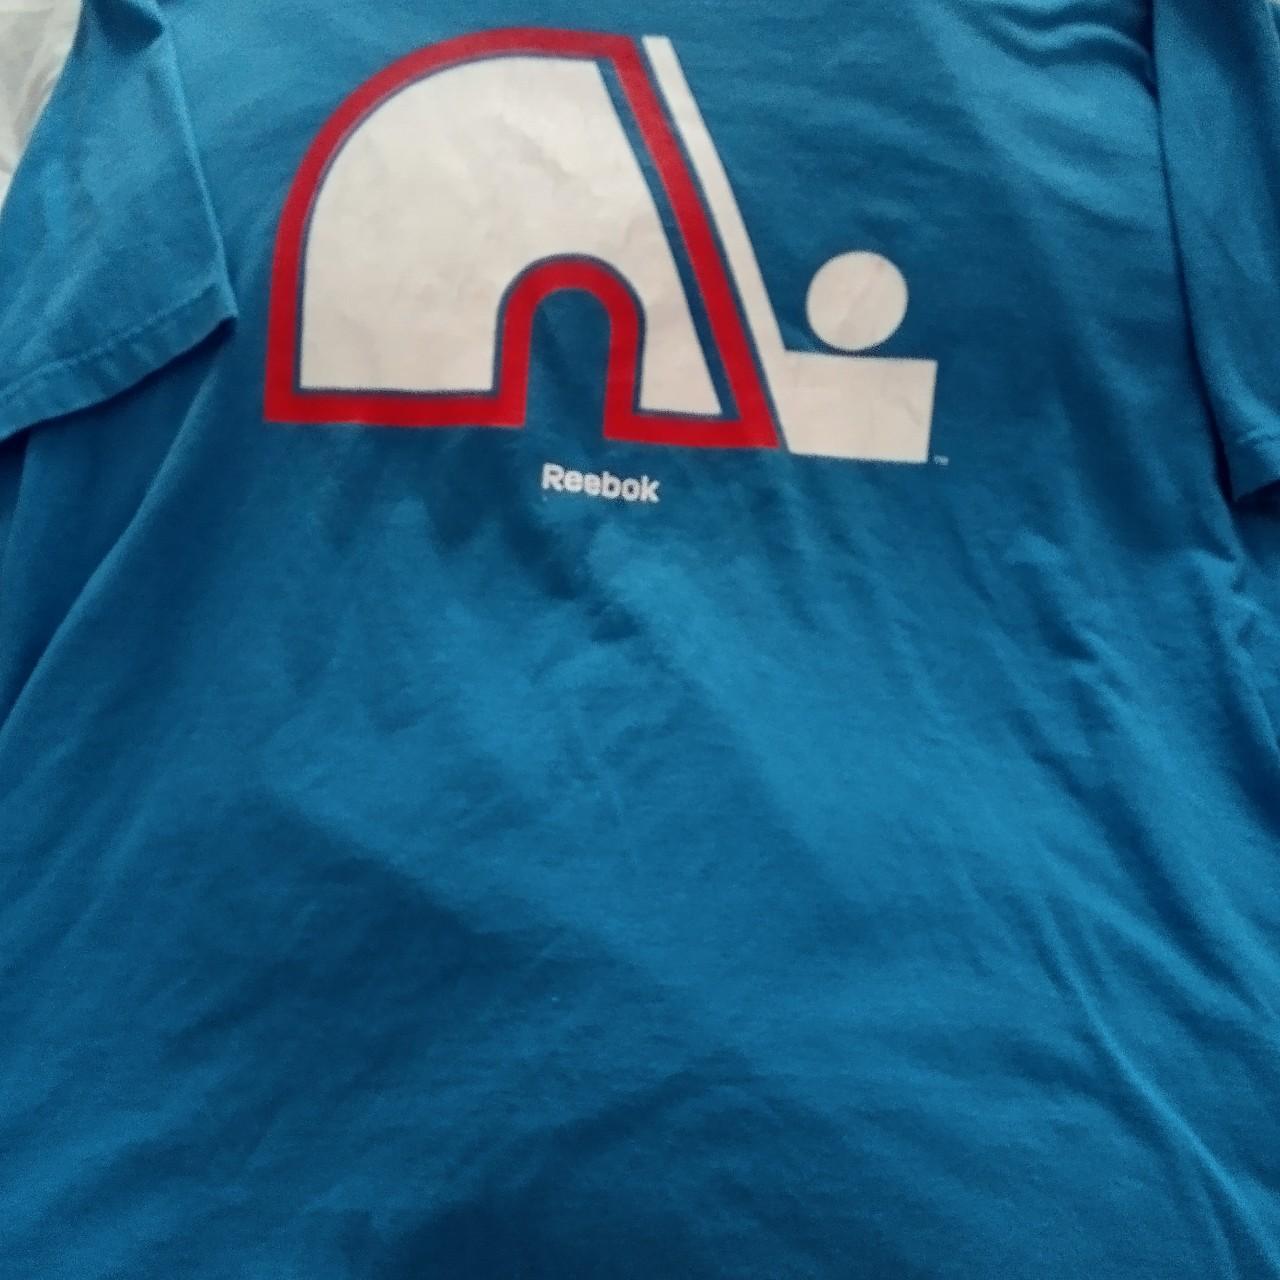 This vintage Quebec Nordiques T-Shirt is a great - Depop